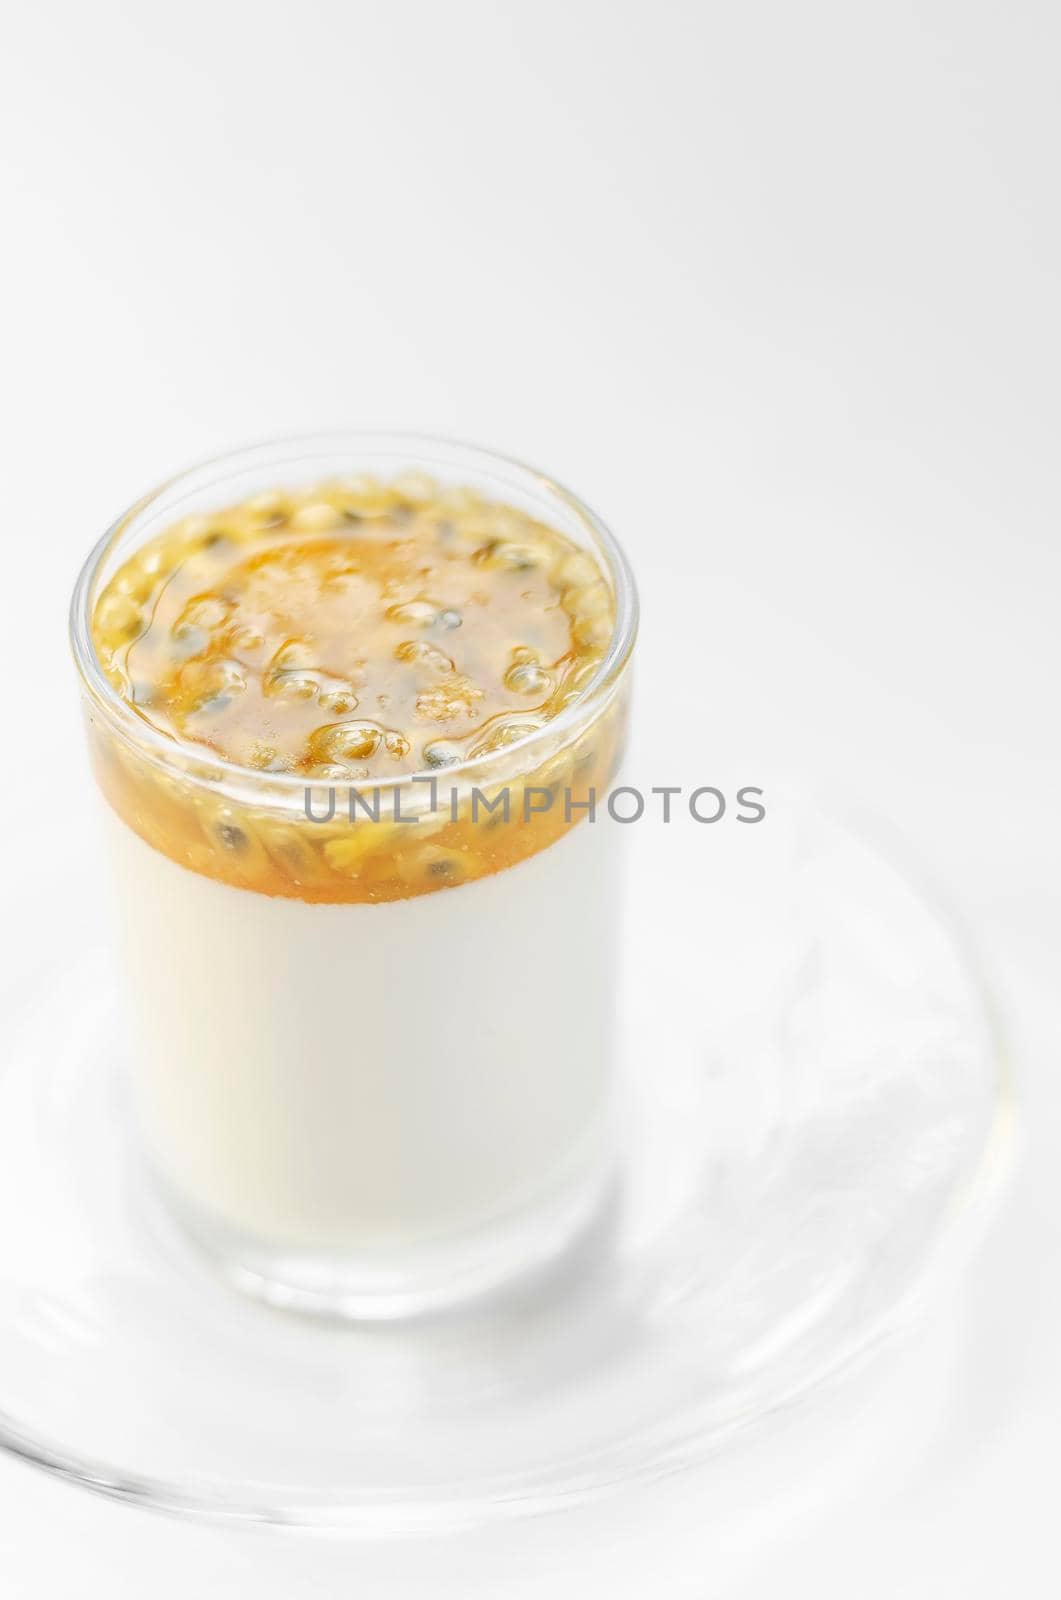 vegan dairy free organic coconut cream panna cotta with passion fruit dessert on white background